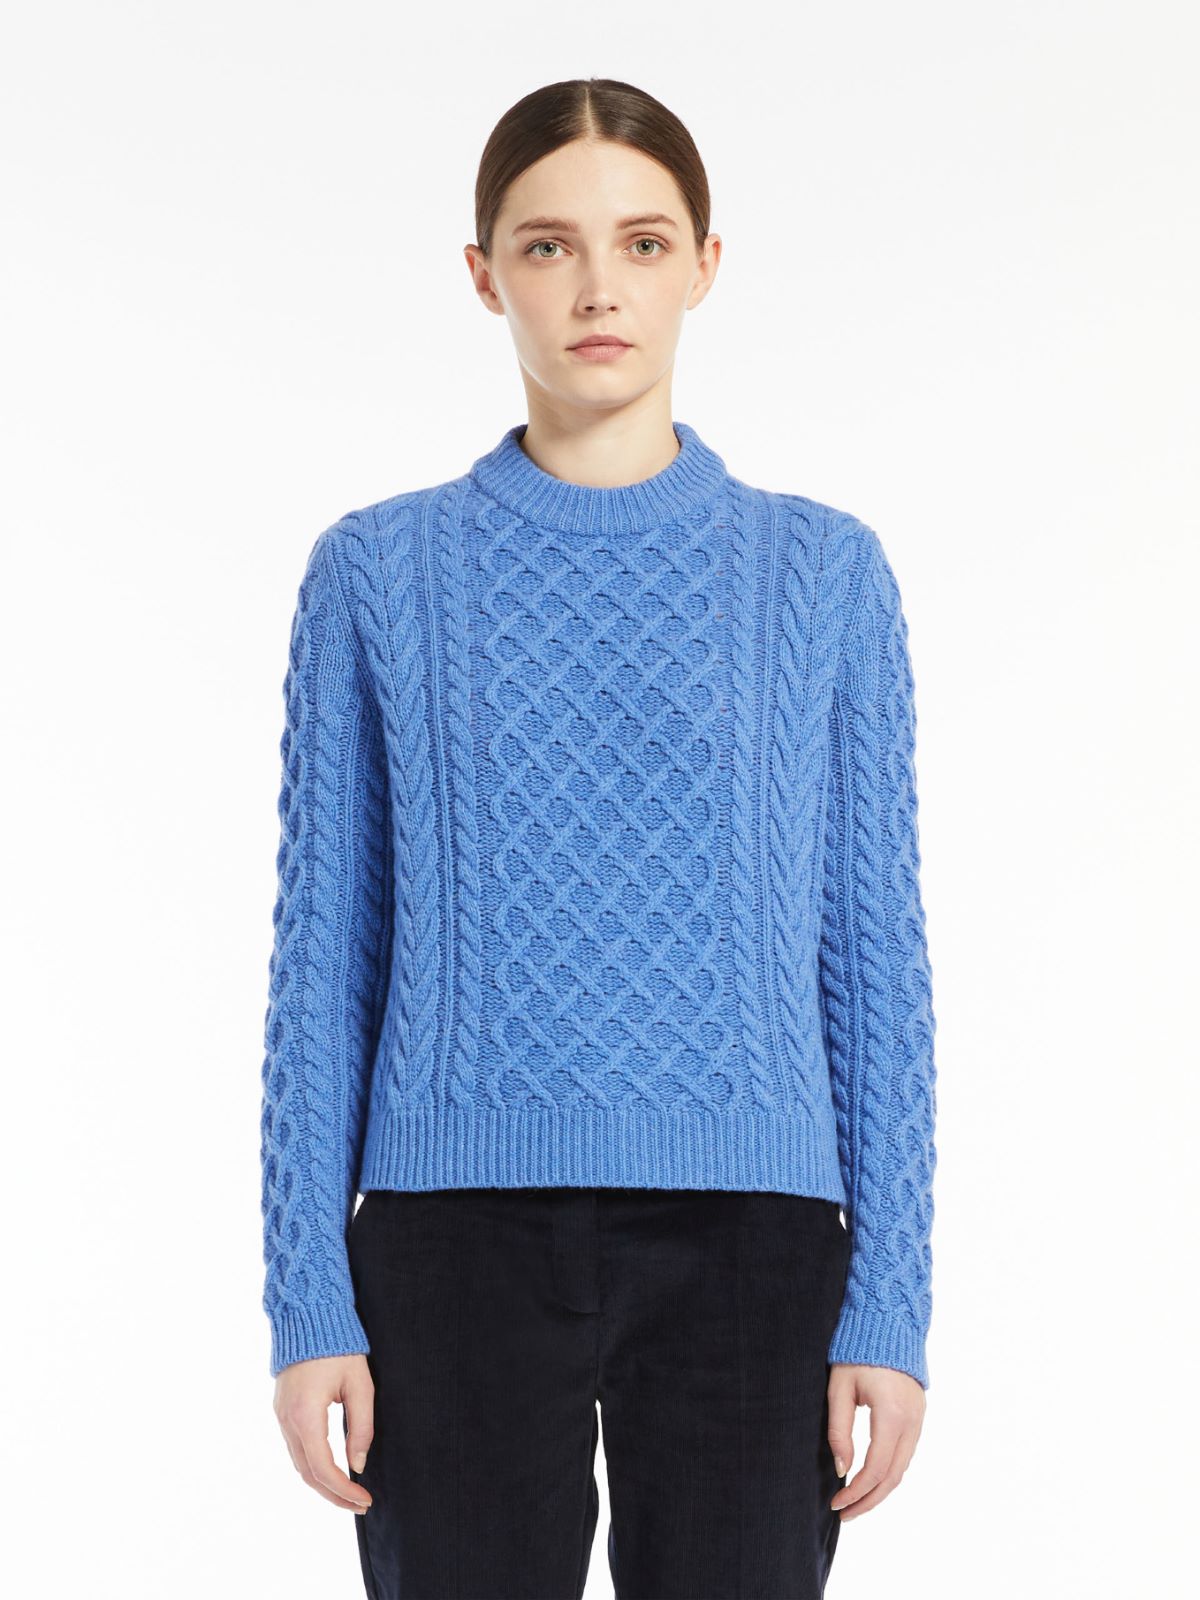 Carded wool sweater - LIGHT BLUE - Weekend Max Mara - 2